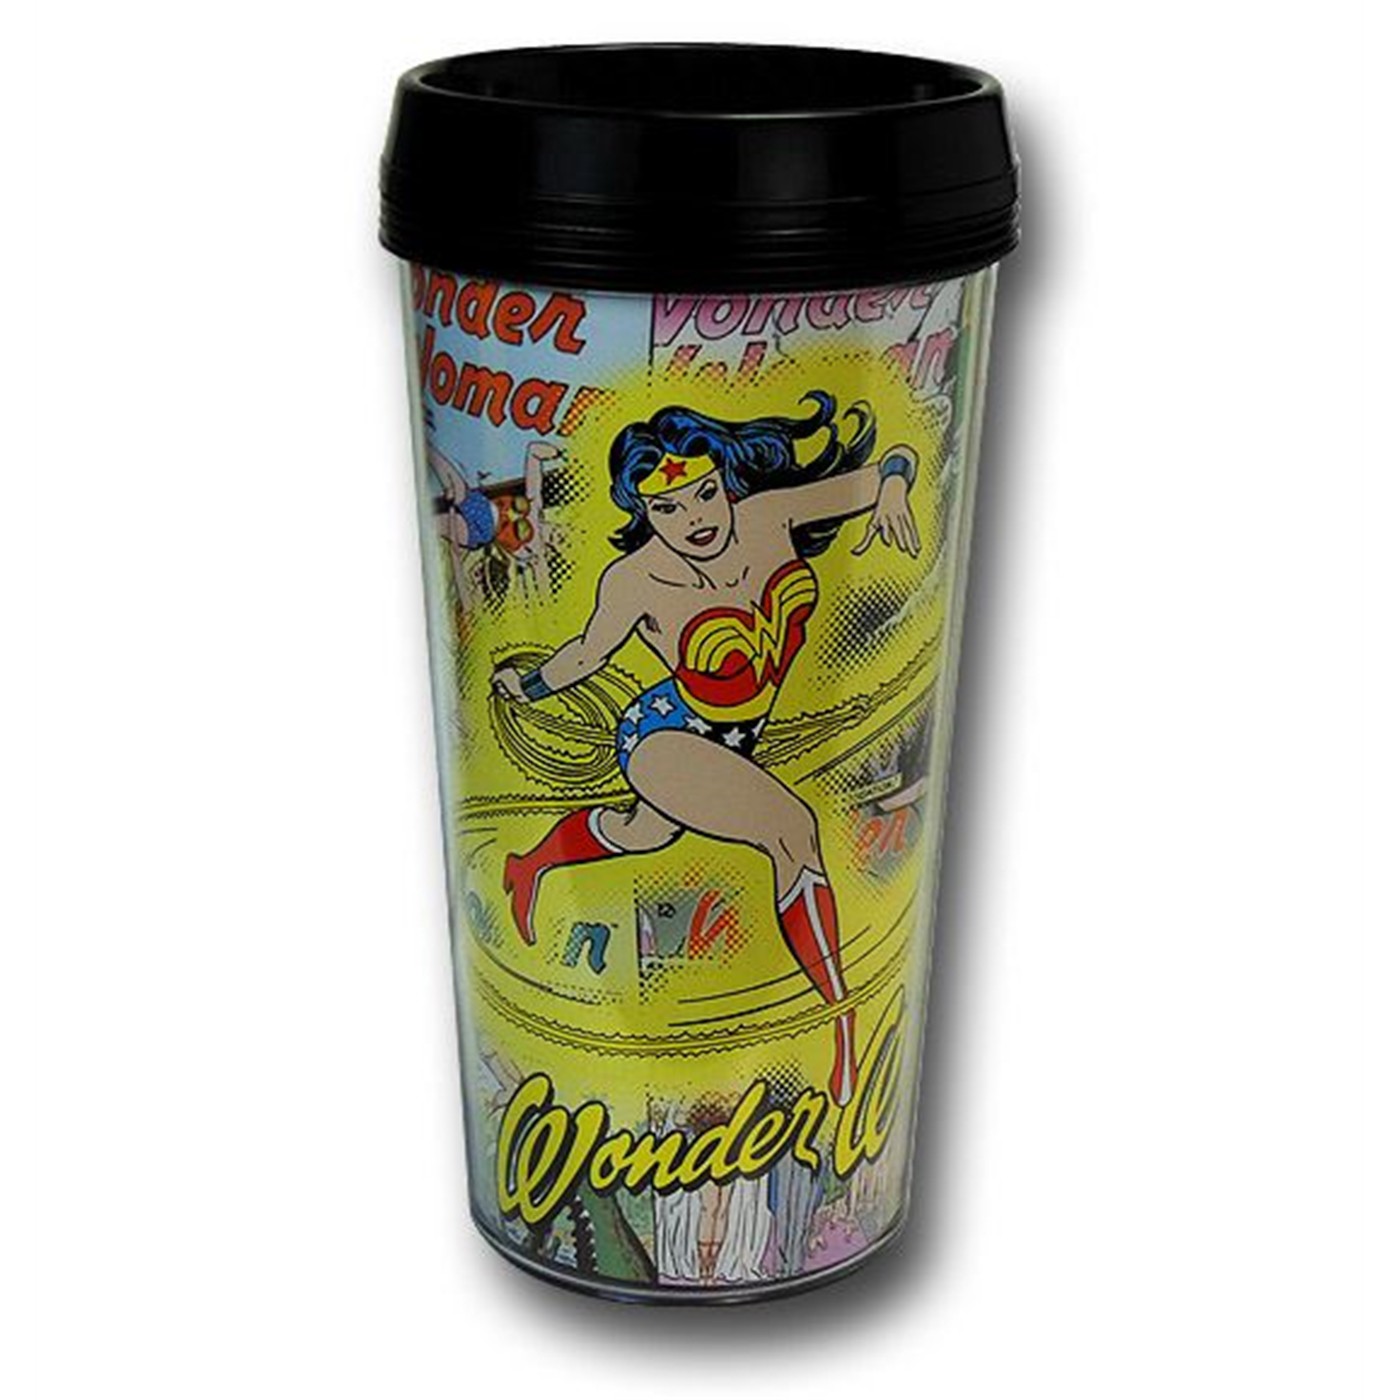 Wonder Woman Travel and Ceramic Mug 2-Pack